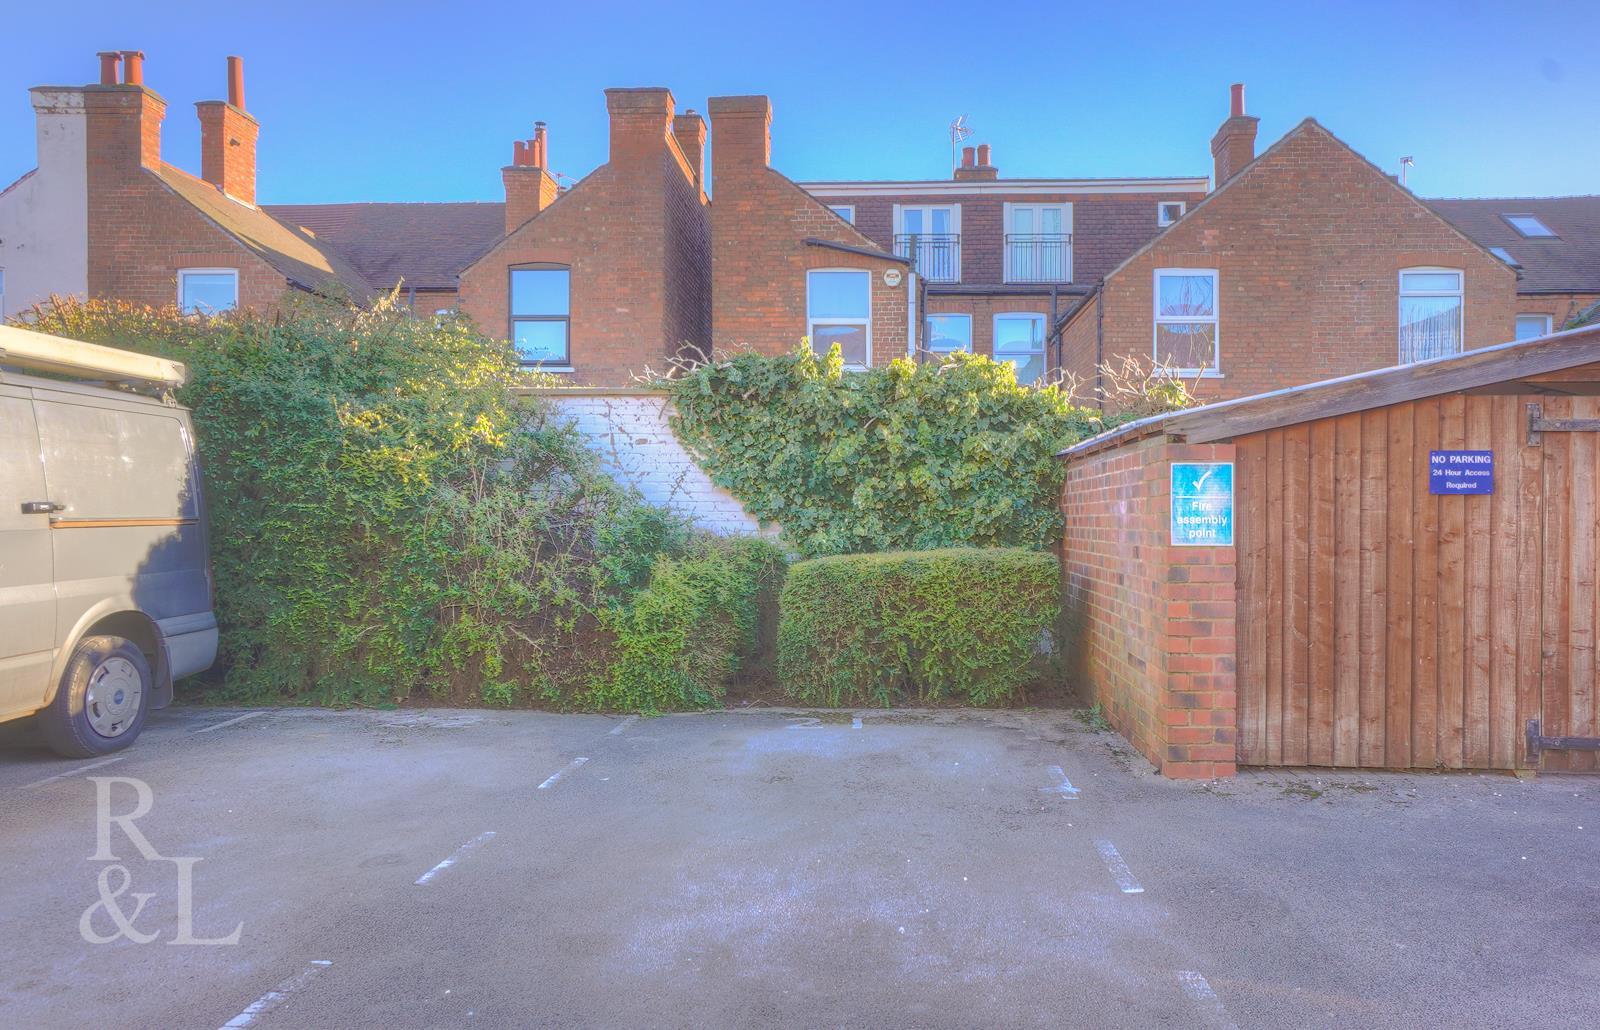 Property image for Edward Road, West Bridgford, Nottingham